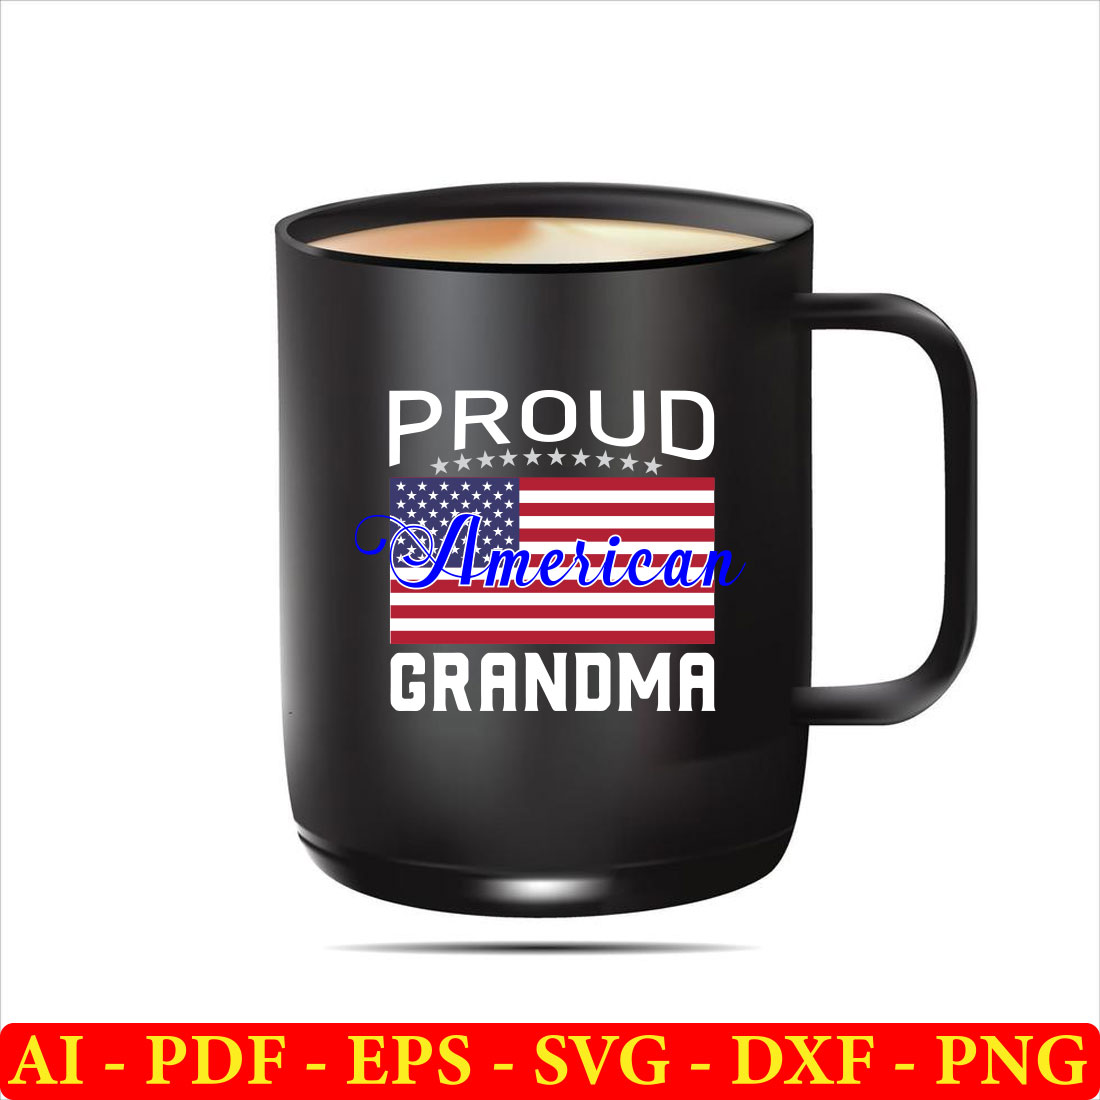 Black coffee mug with an american flag on it.